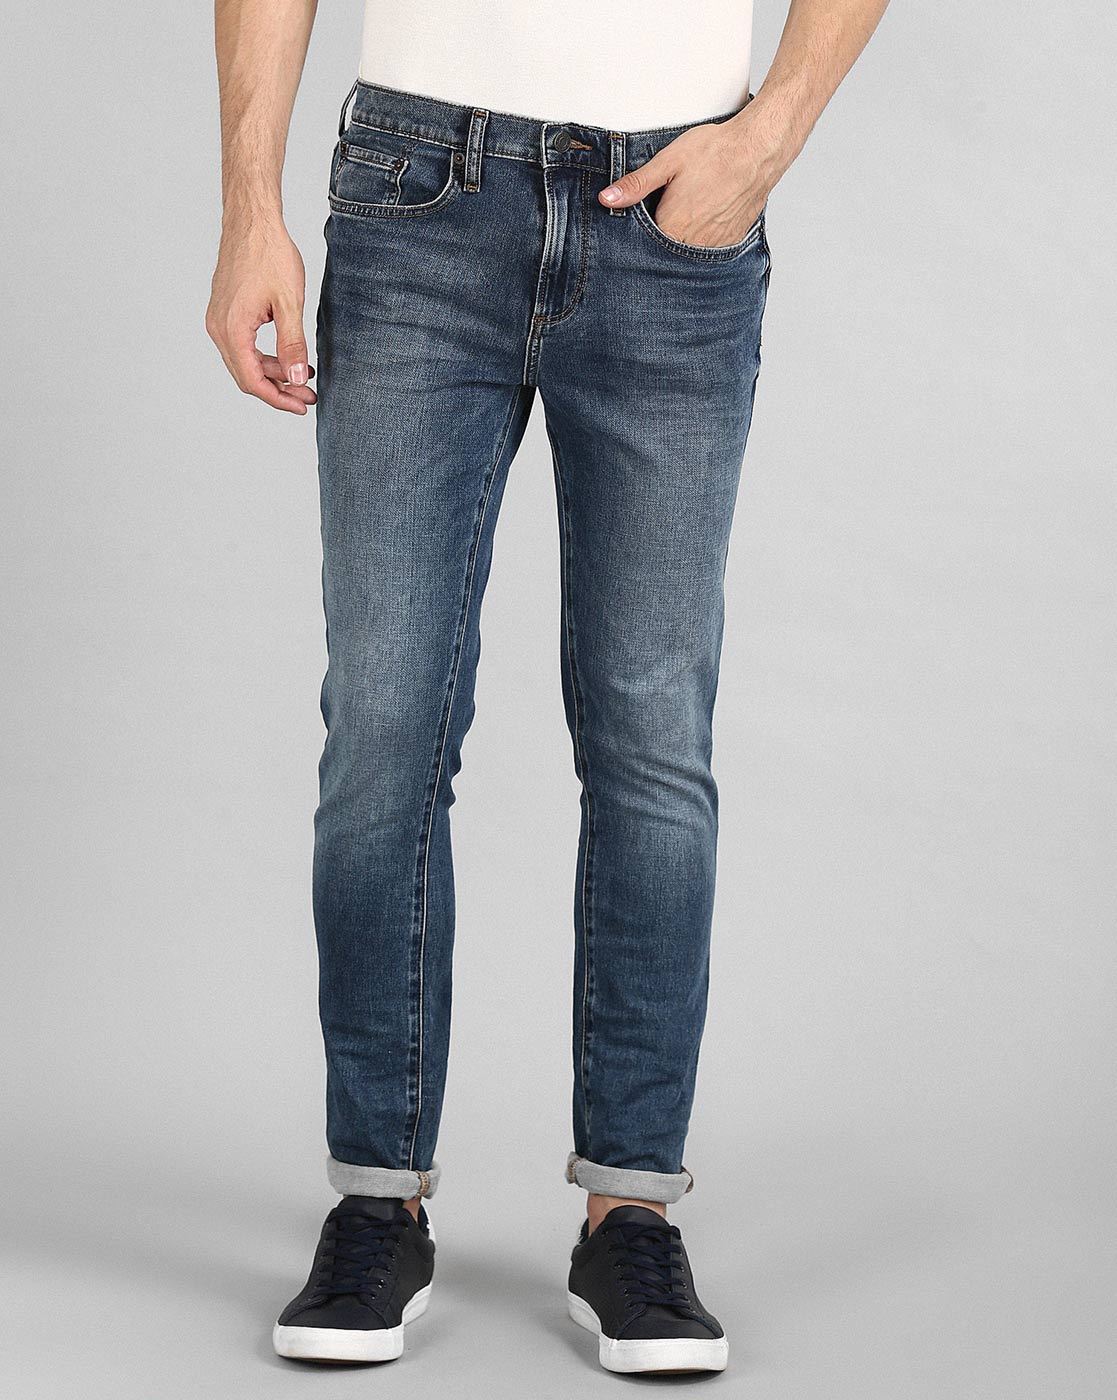 gap distressed jeans